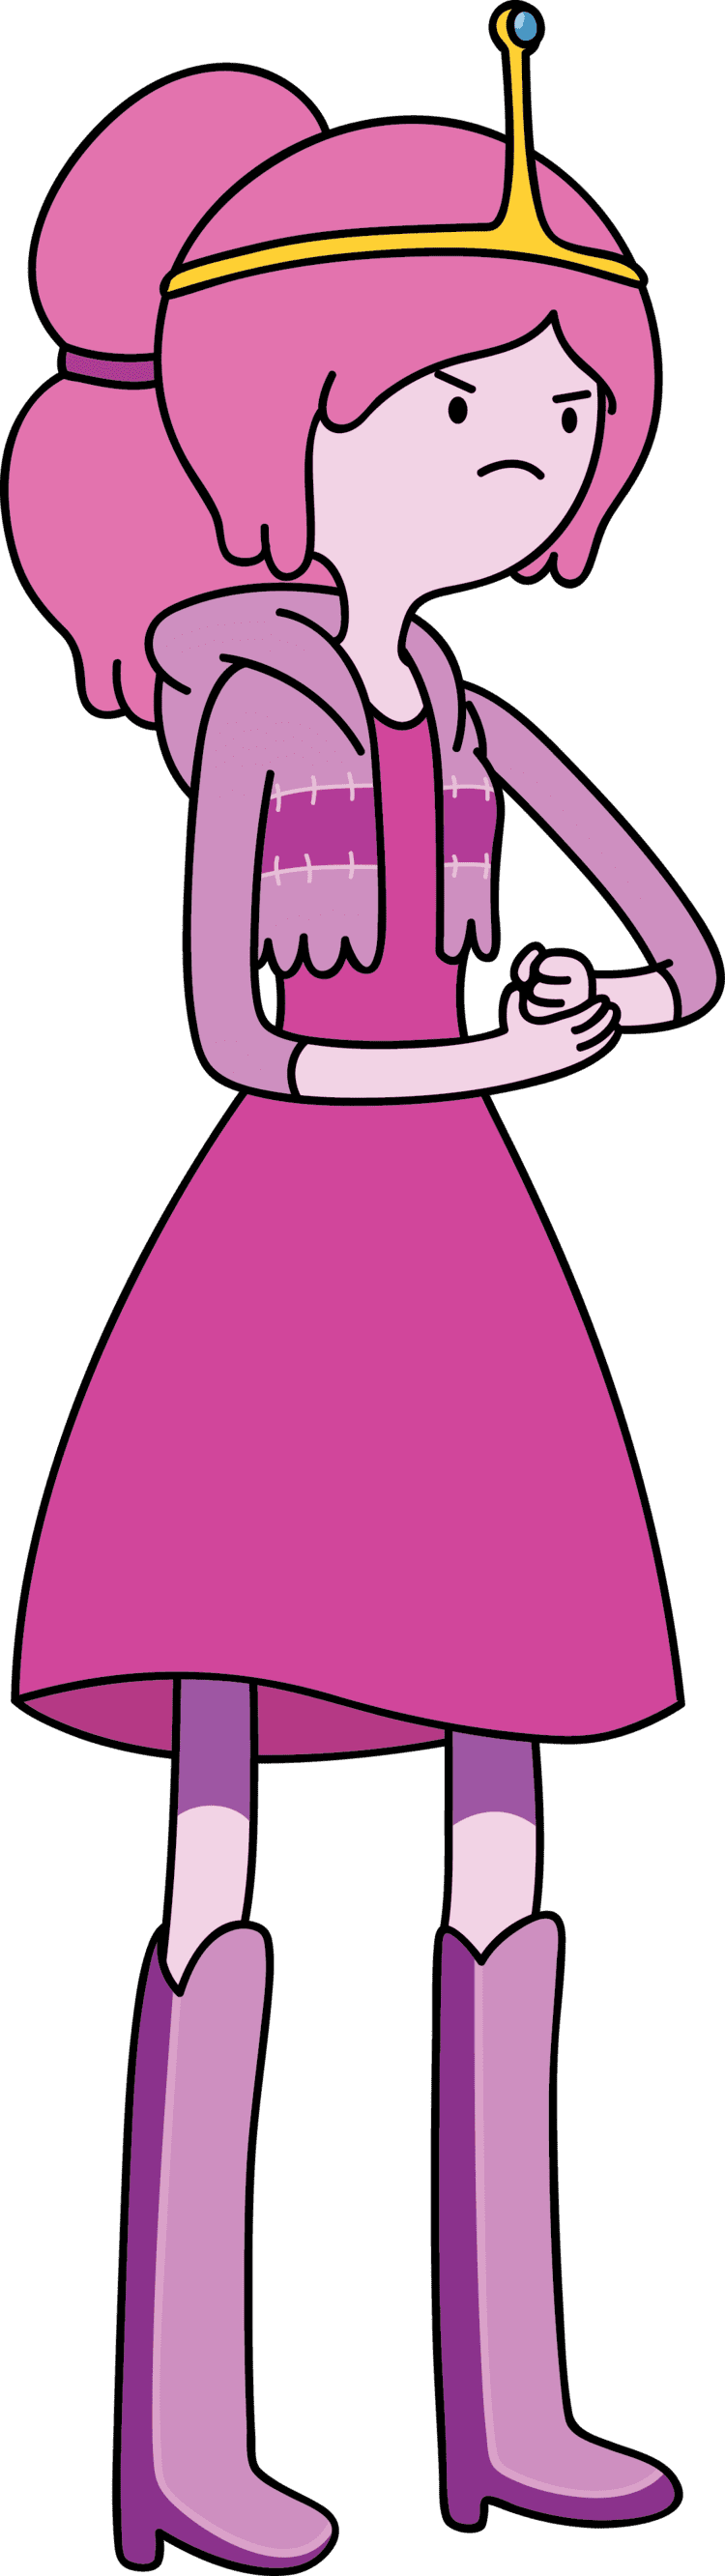 Princess Bubblegum Princess Bubblegum vs Lumpy Space Princess Battles Comic Vine